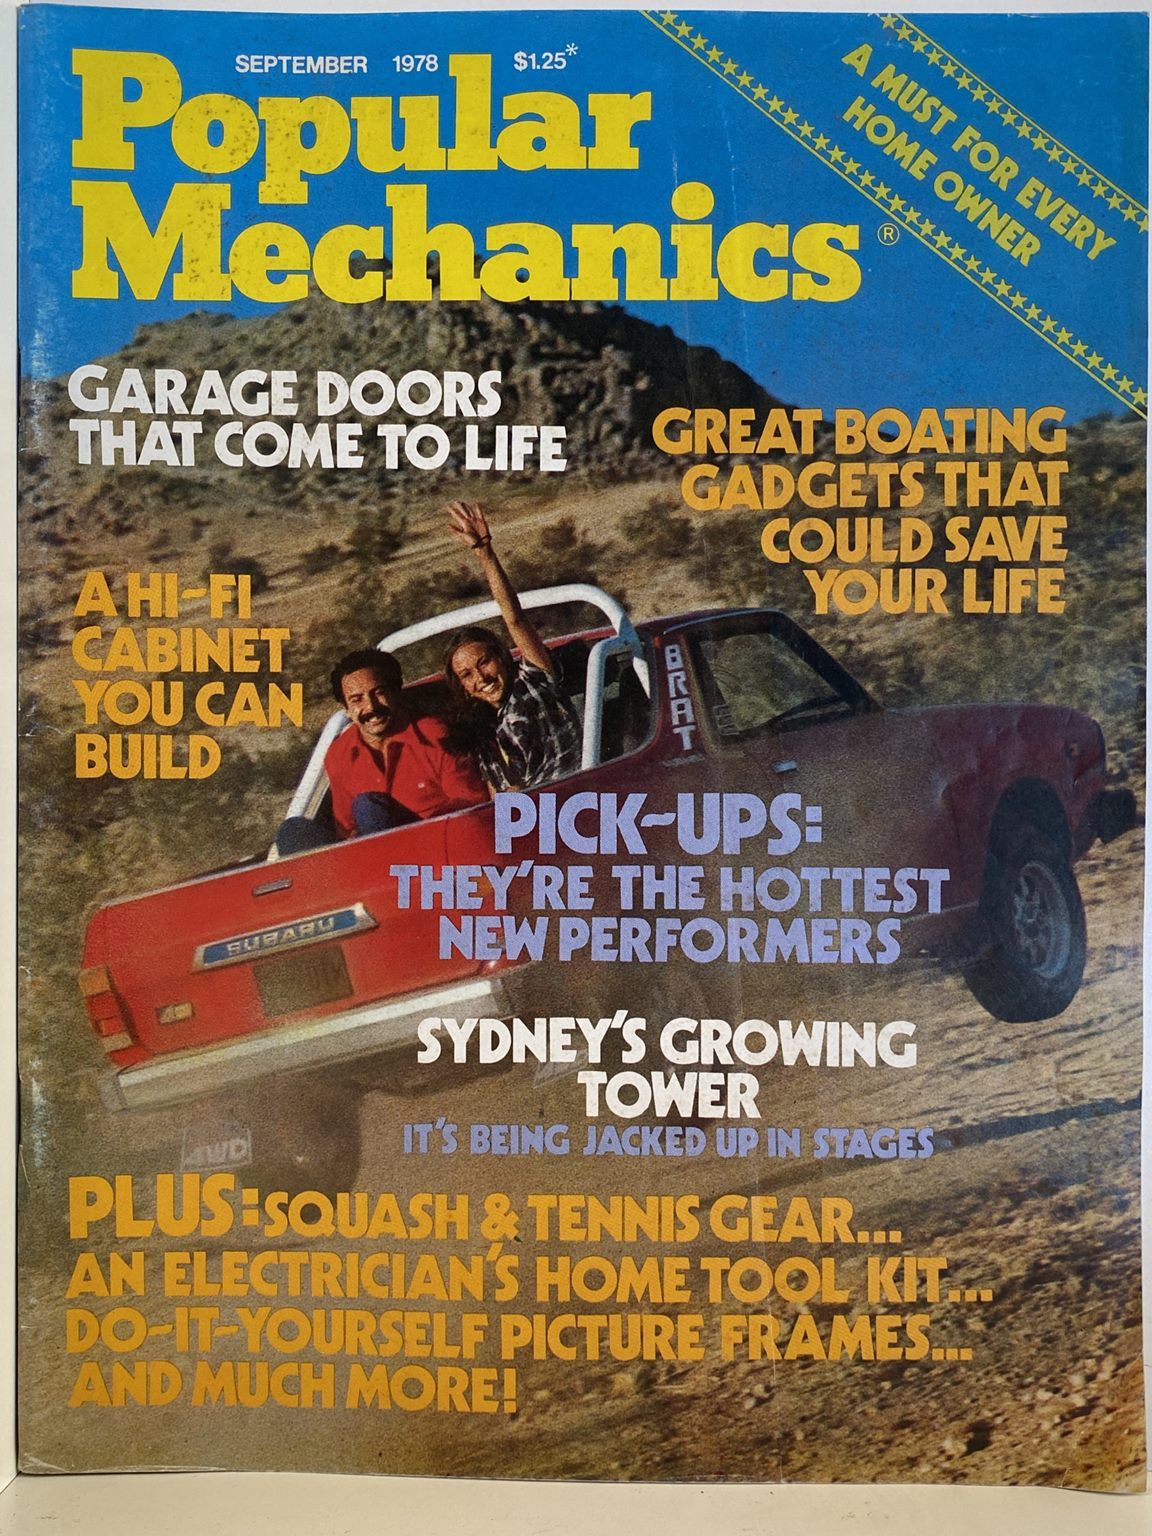 VINTAGE MAGAZINE: Popular Mechanics - Vol. 147, No. 9 - September 1978